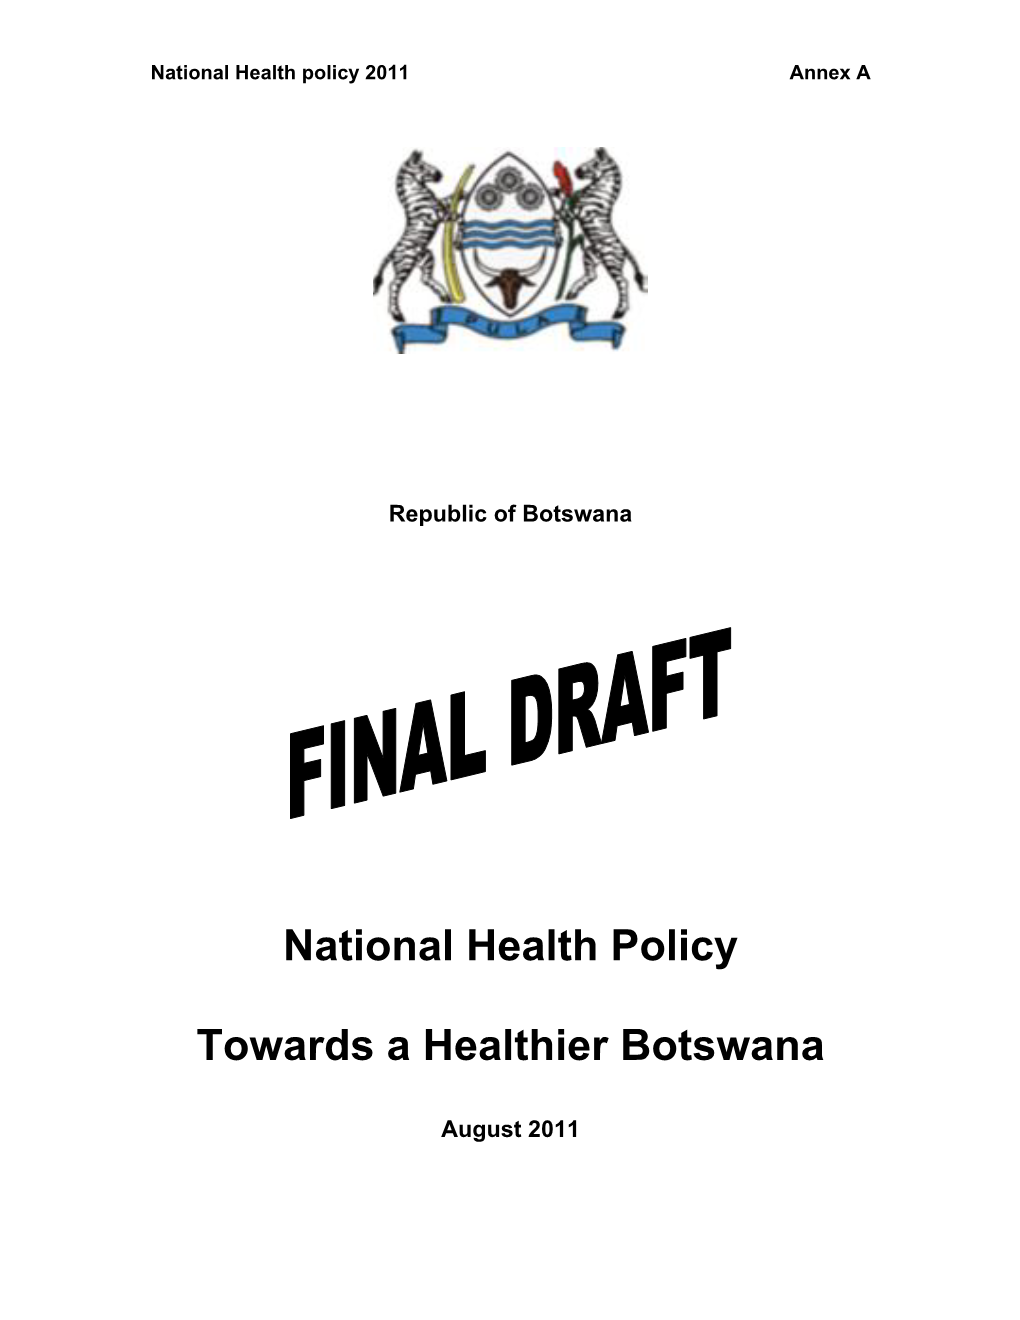 National Health Policy Towards a Healthier Botswana